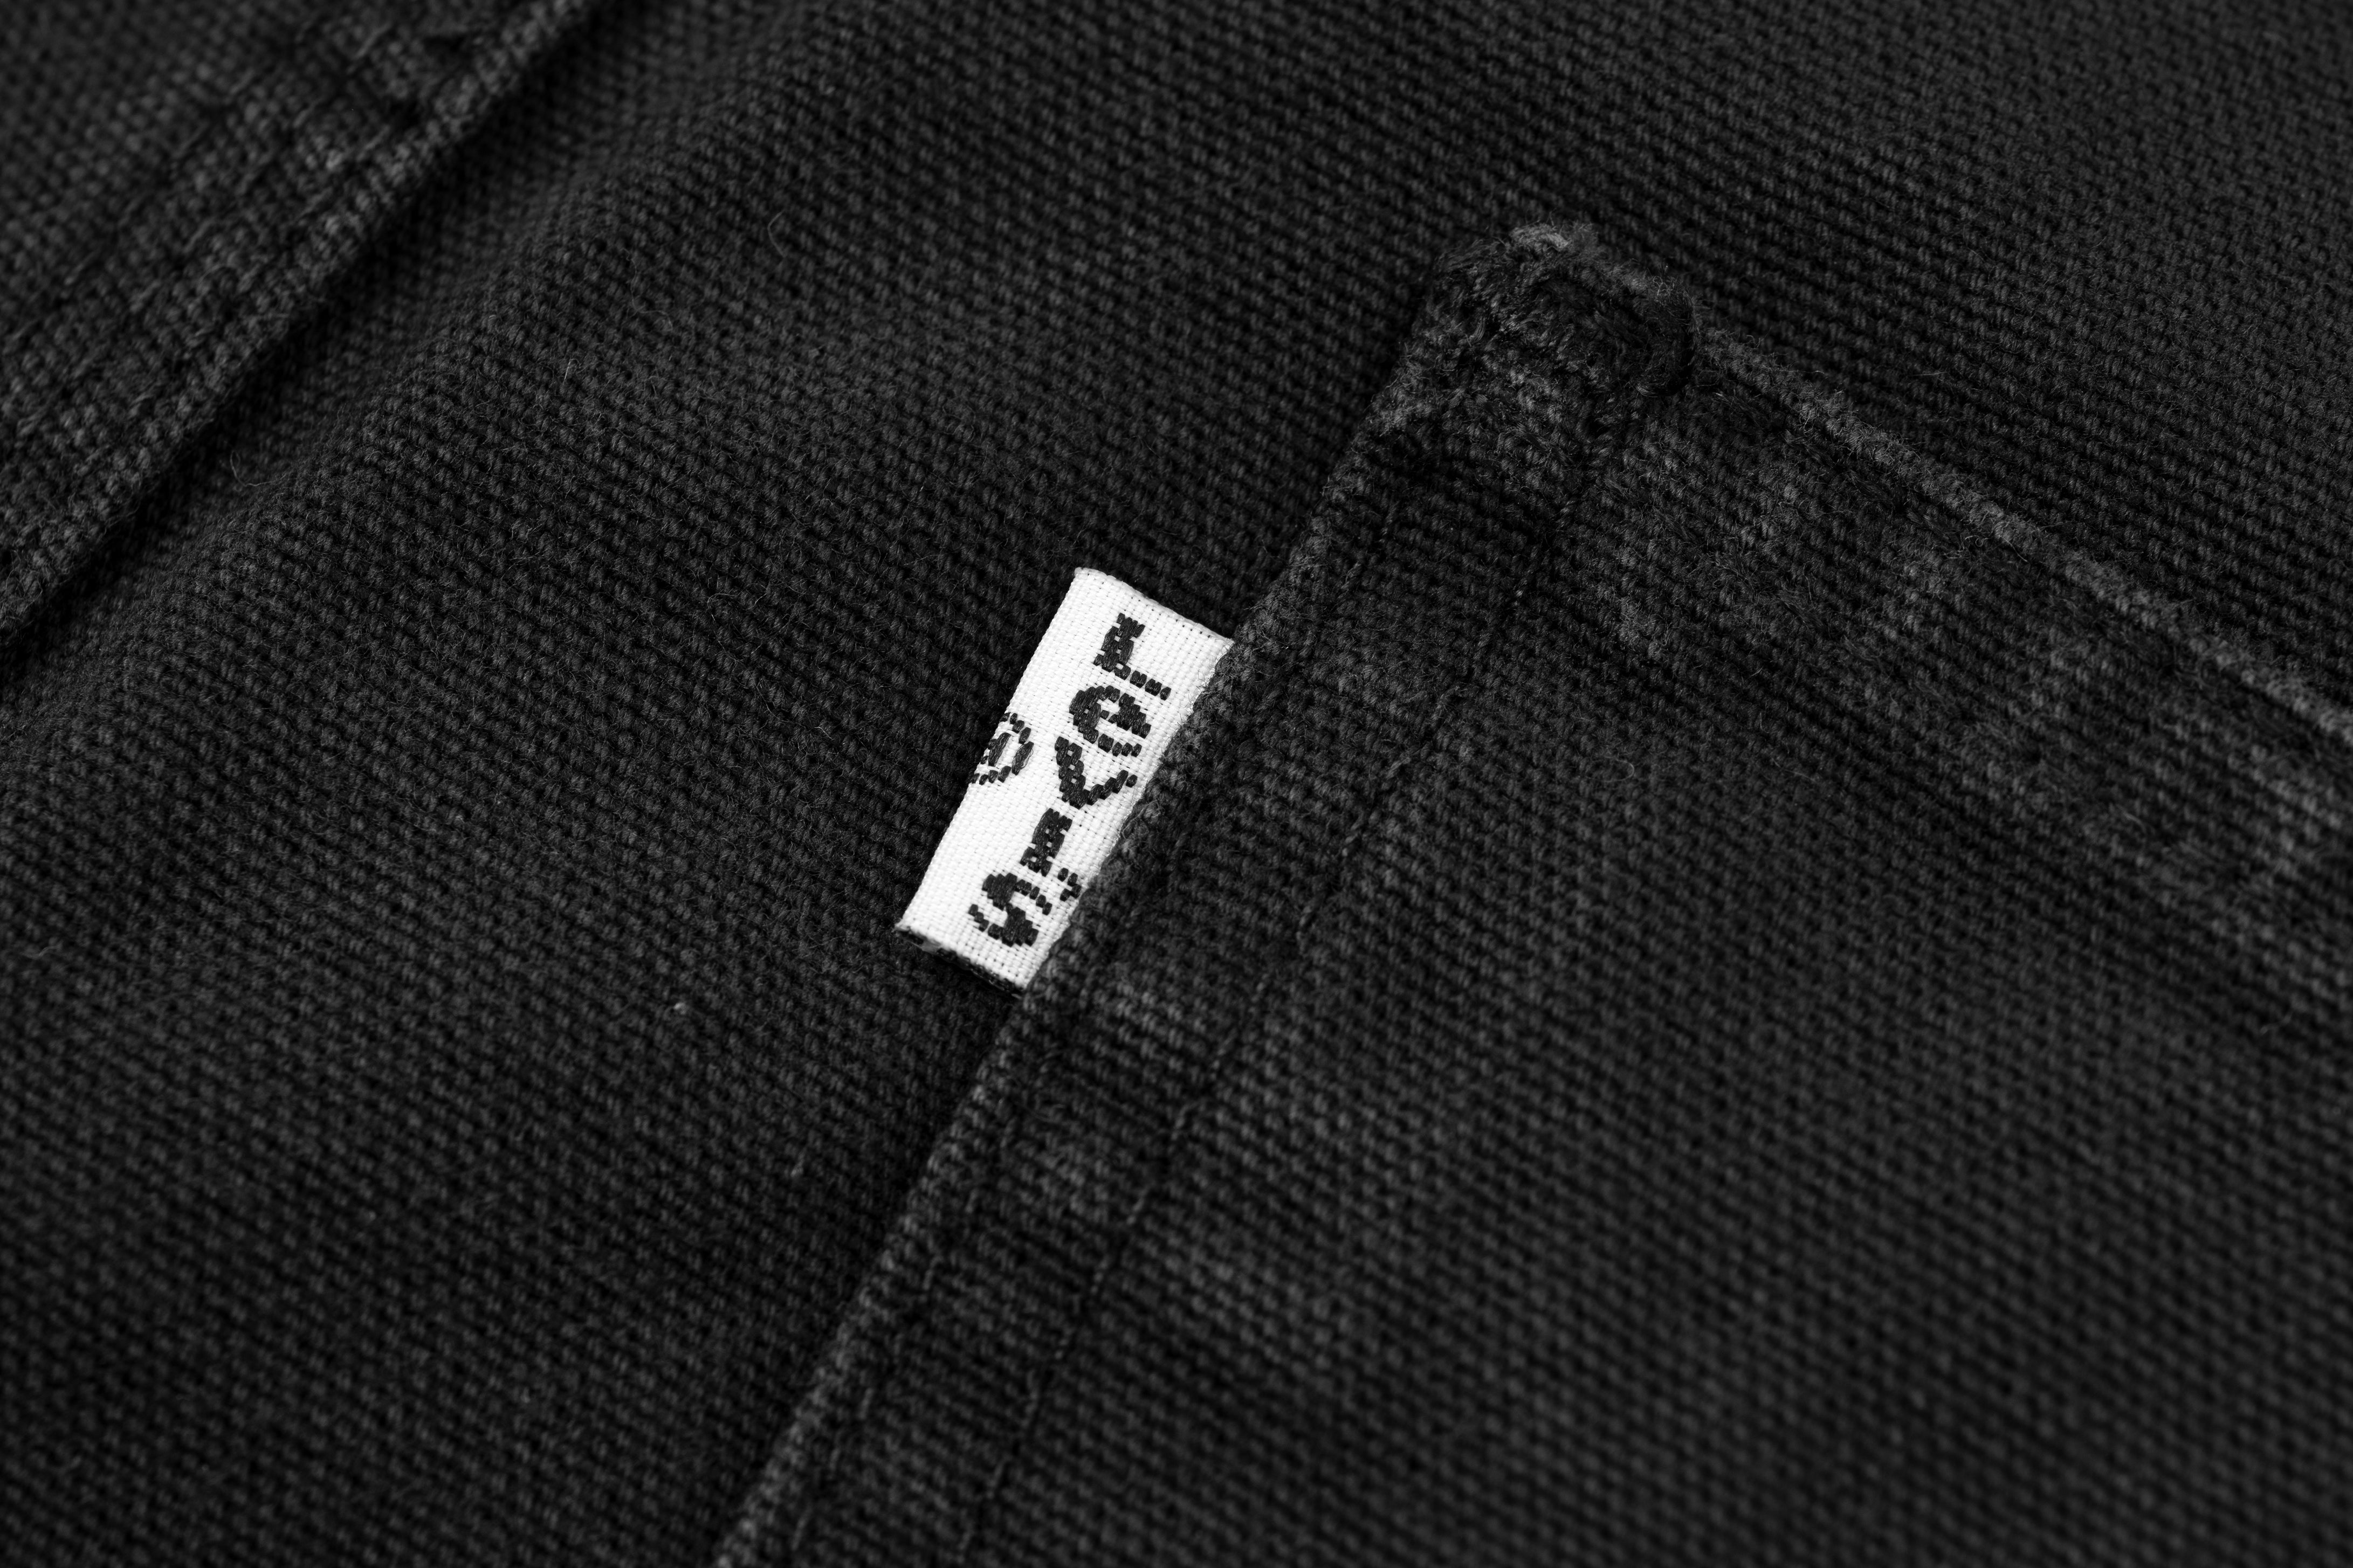 Vintage Black Levi’s Workwear Dungarees, Men's S